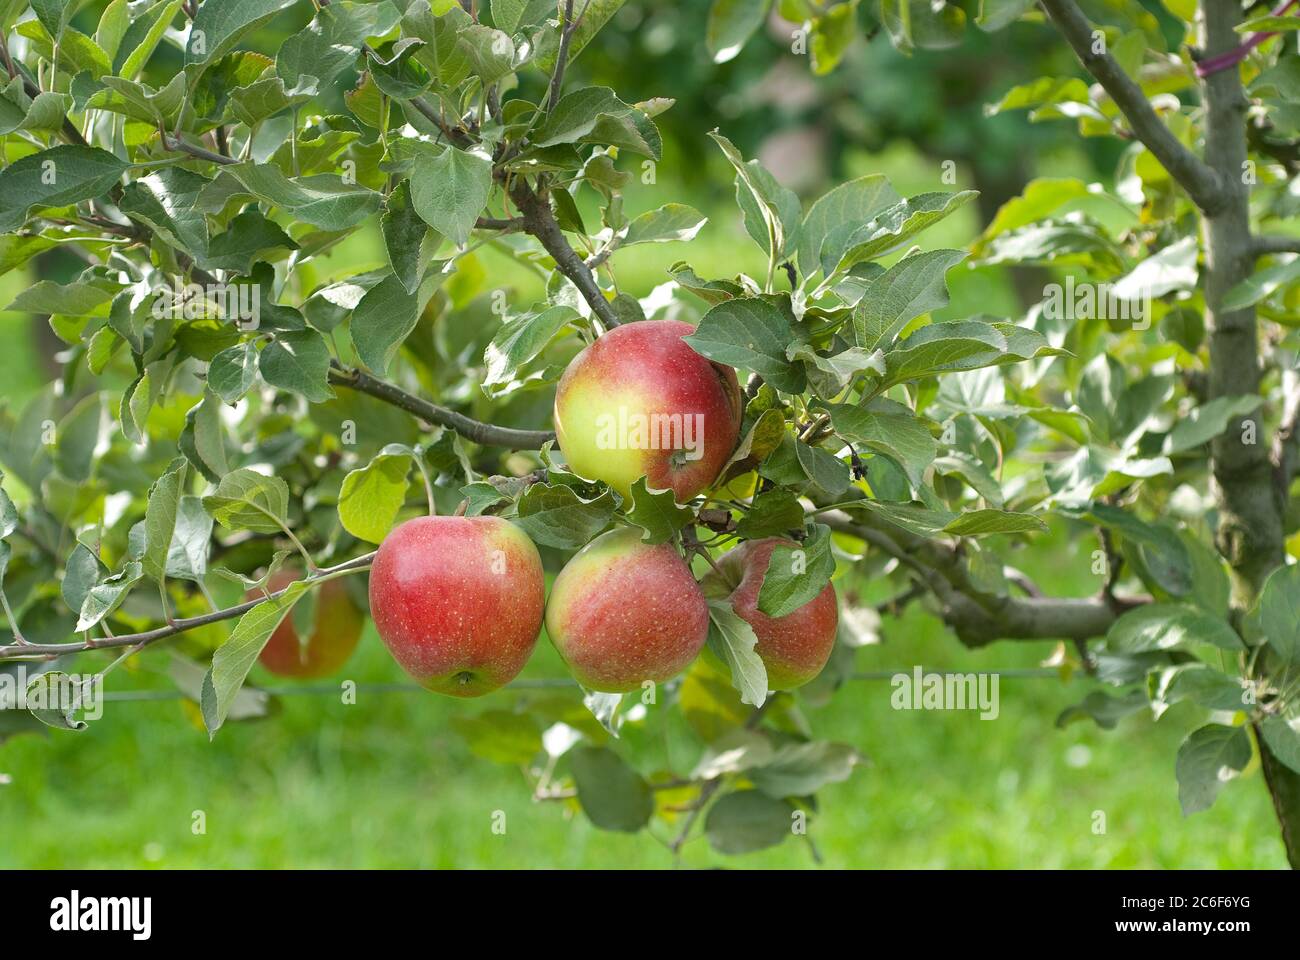 Apfel, Malus domestica Geheimrat Breuhahn, Apple, Malus domestica privy Breuhahn Stock Photo